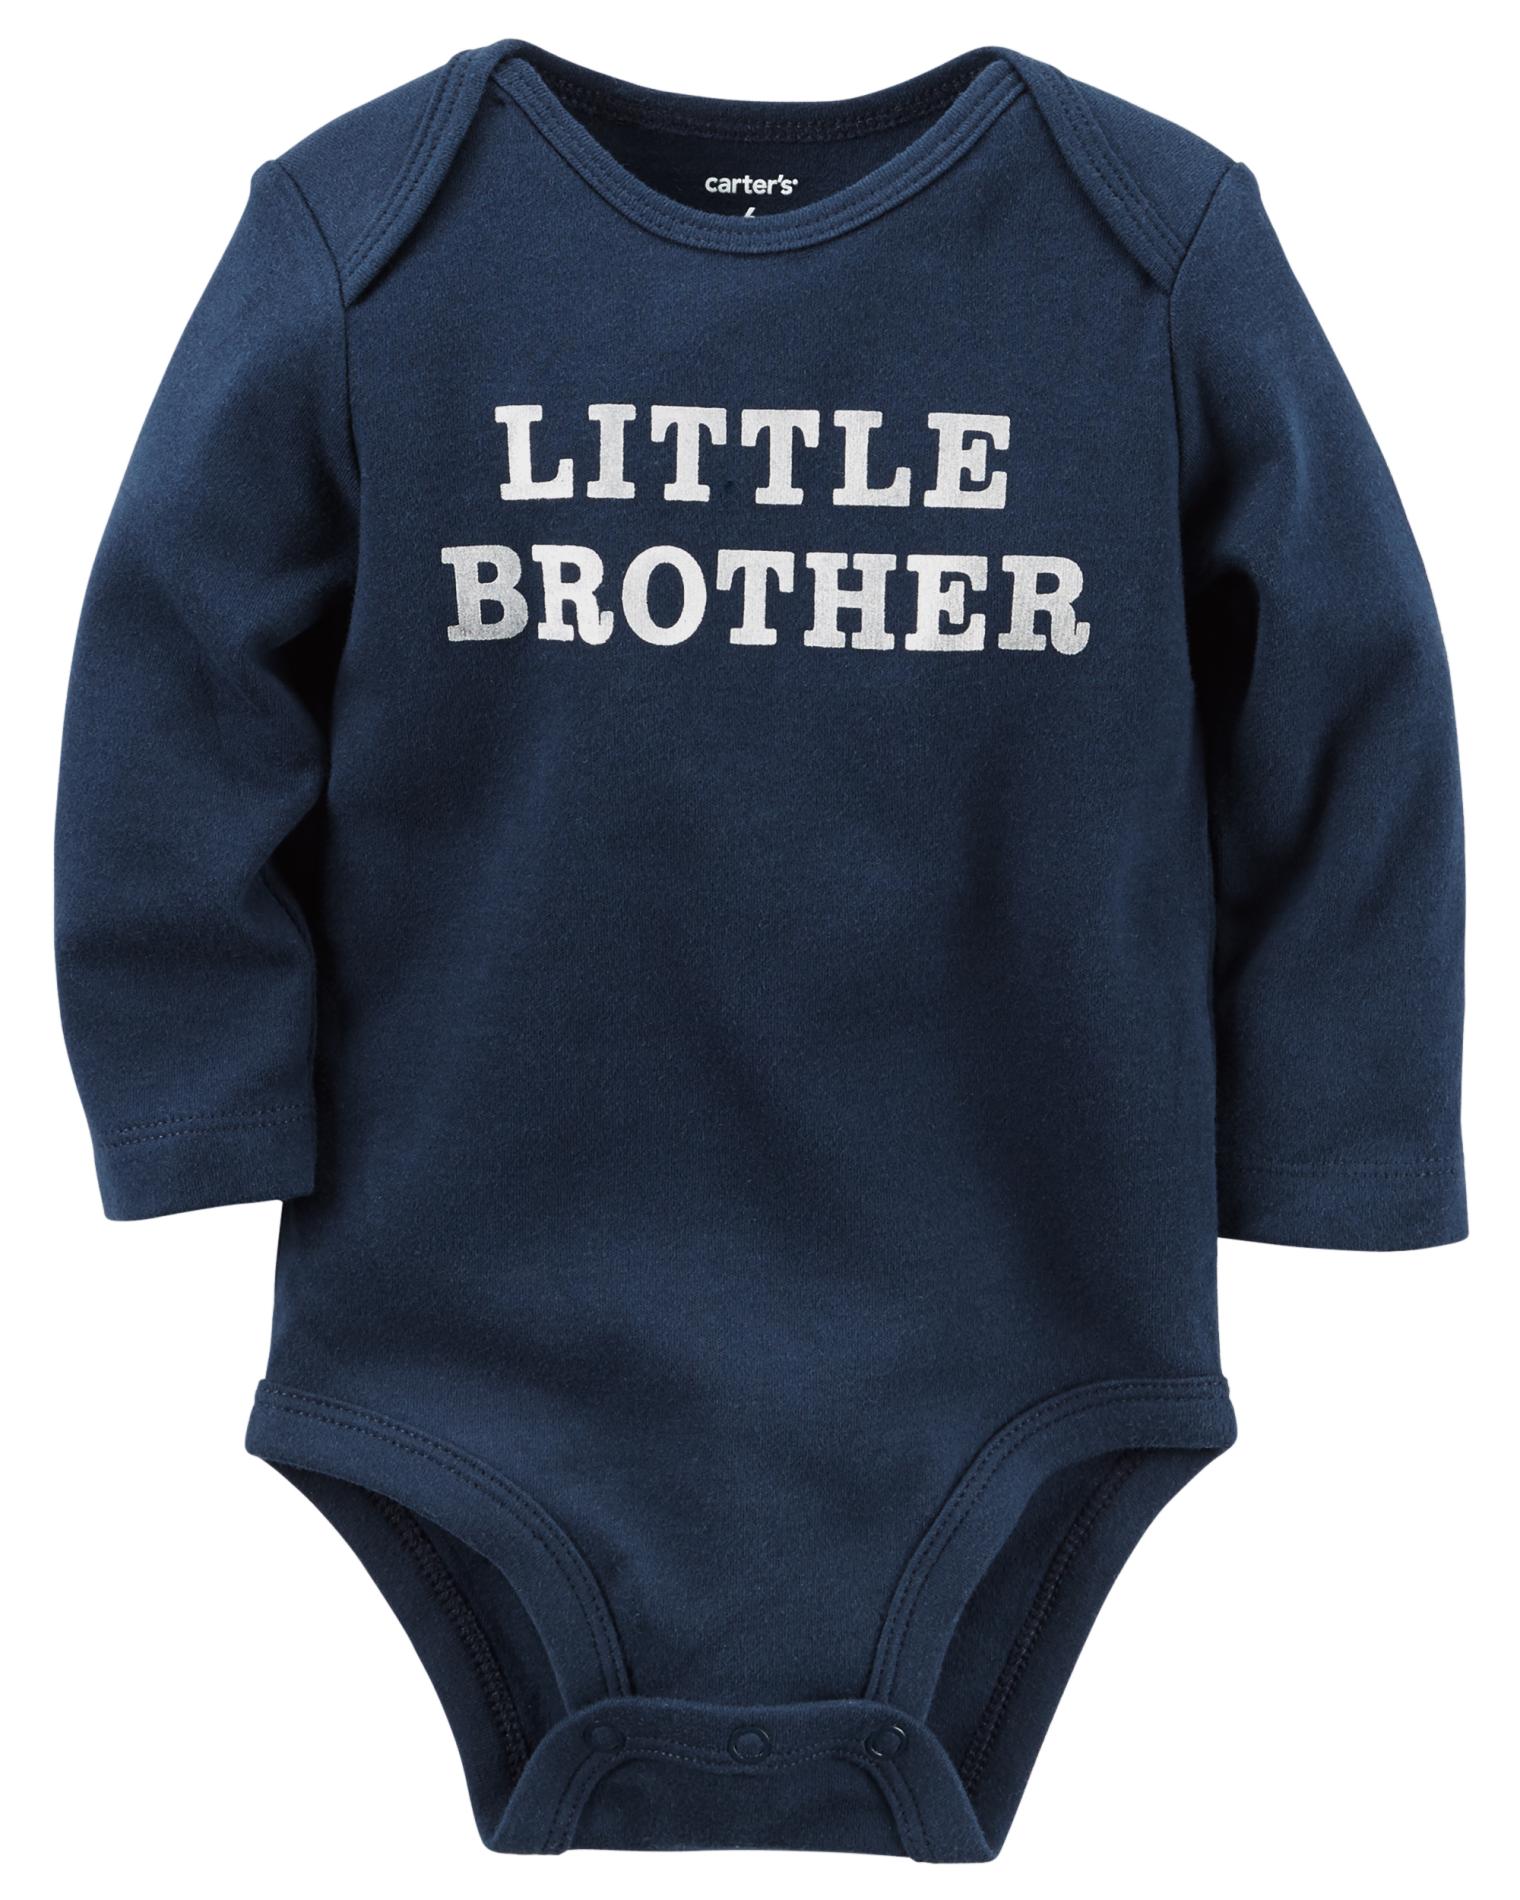 Carter's Newborn & Infant Boys' Long-Sleeve Bodysuit - Little Brother